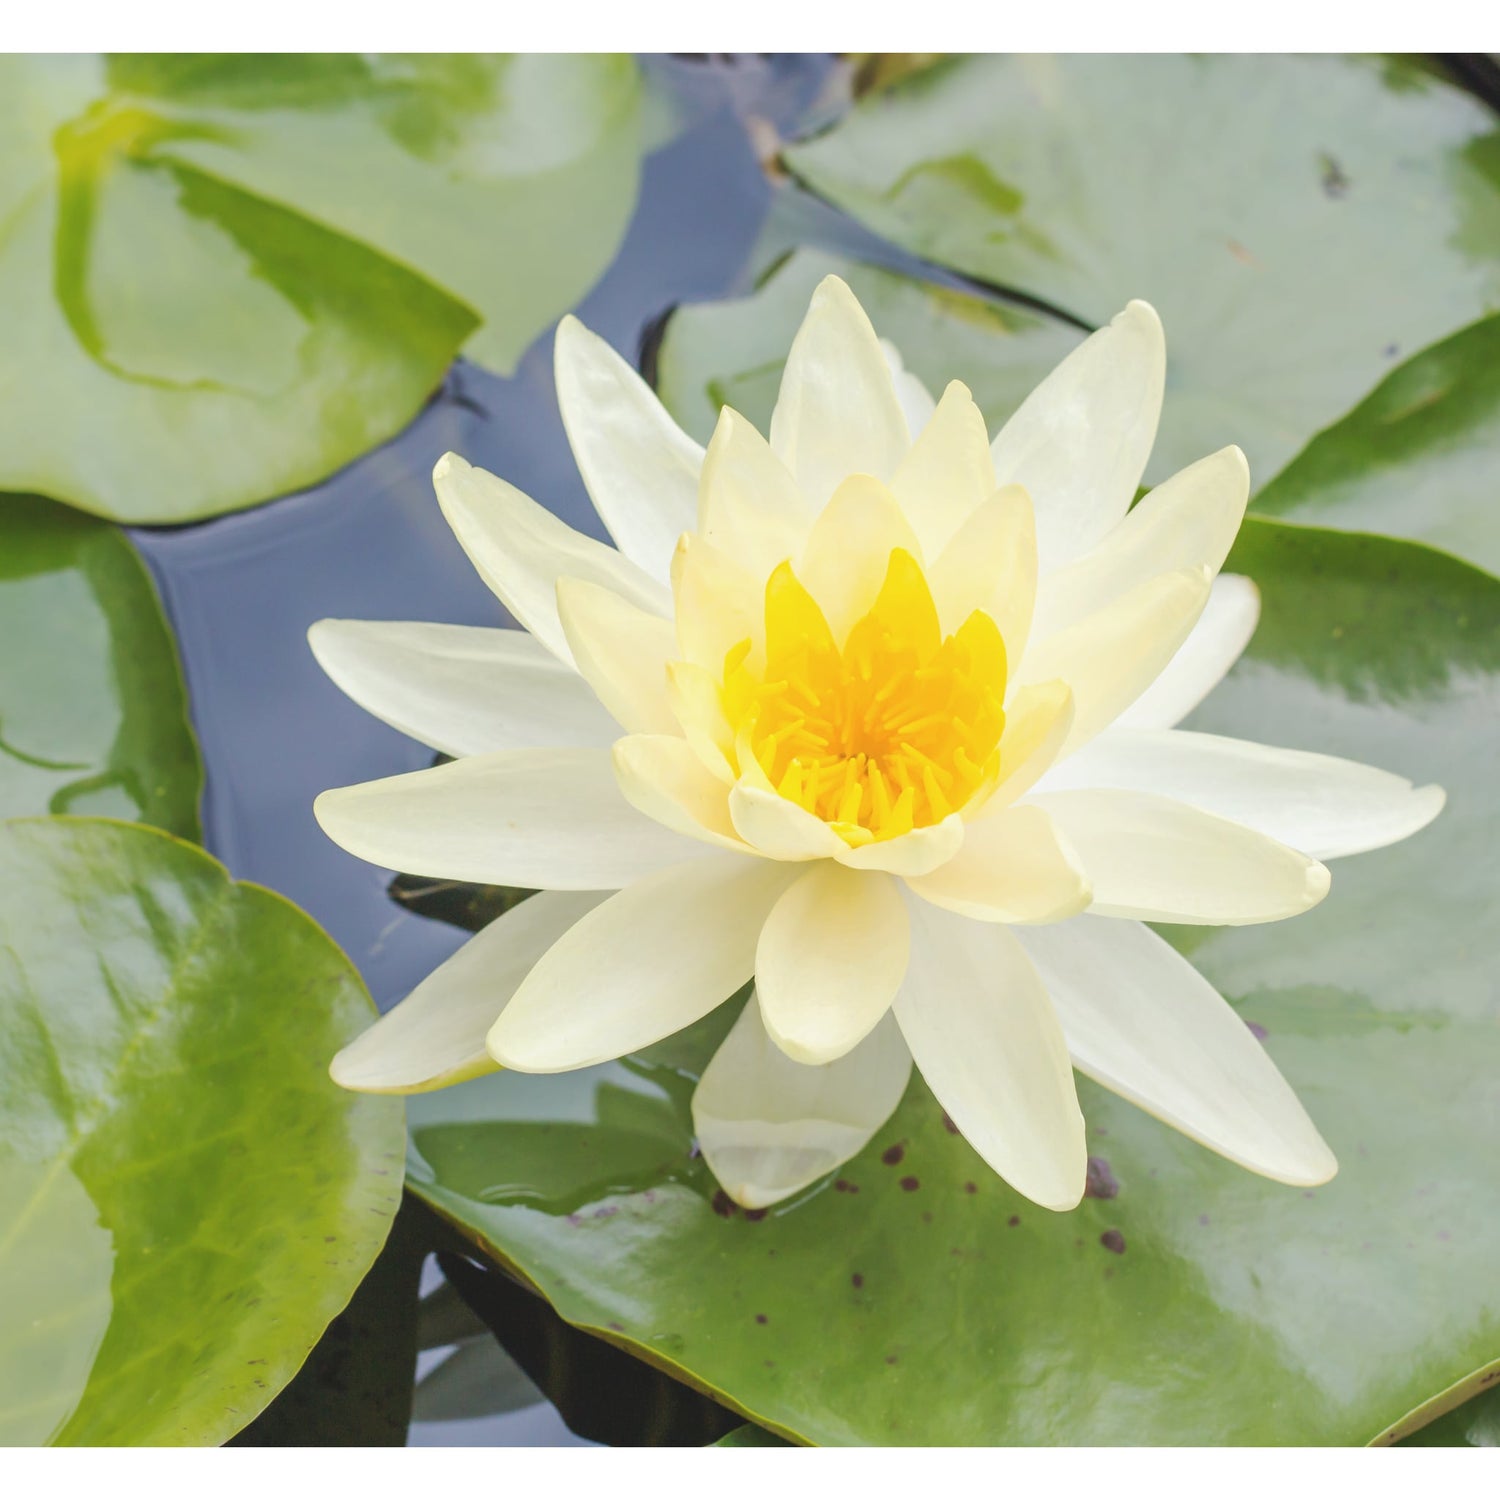 Health benefits of aquatic plants and pond lilies